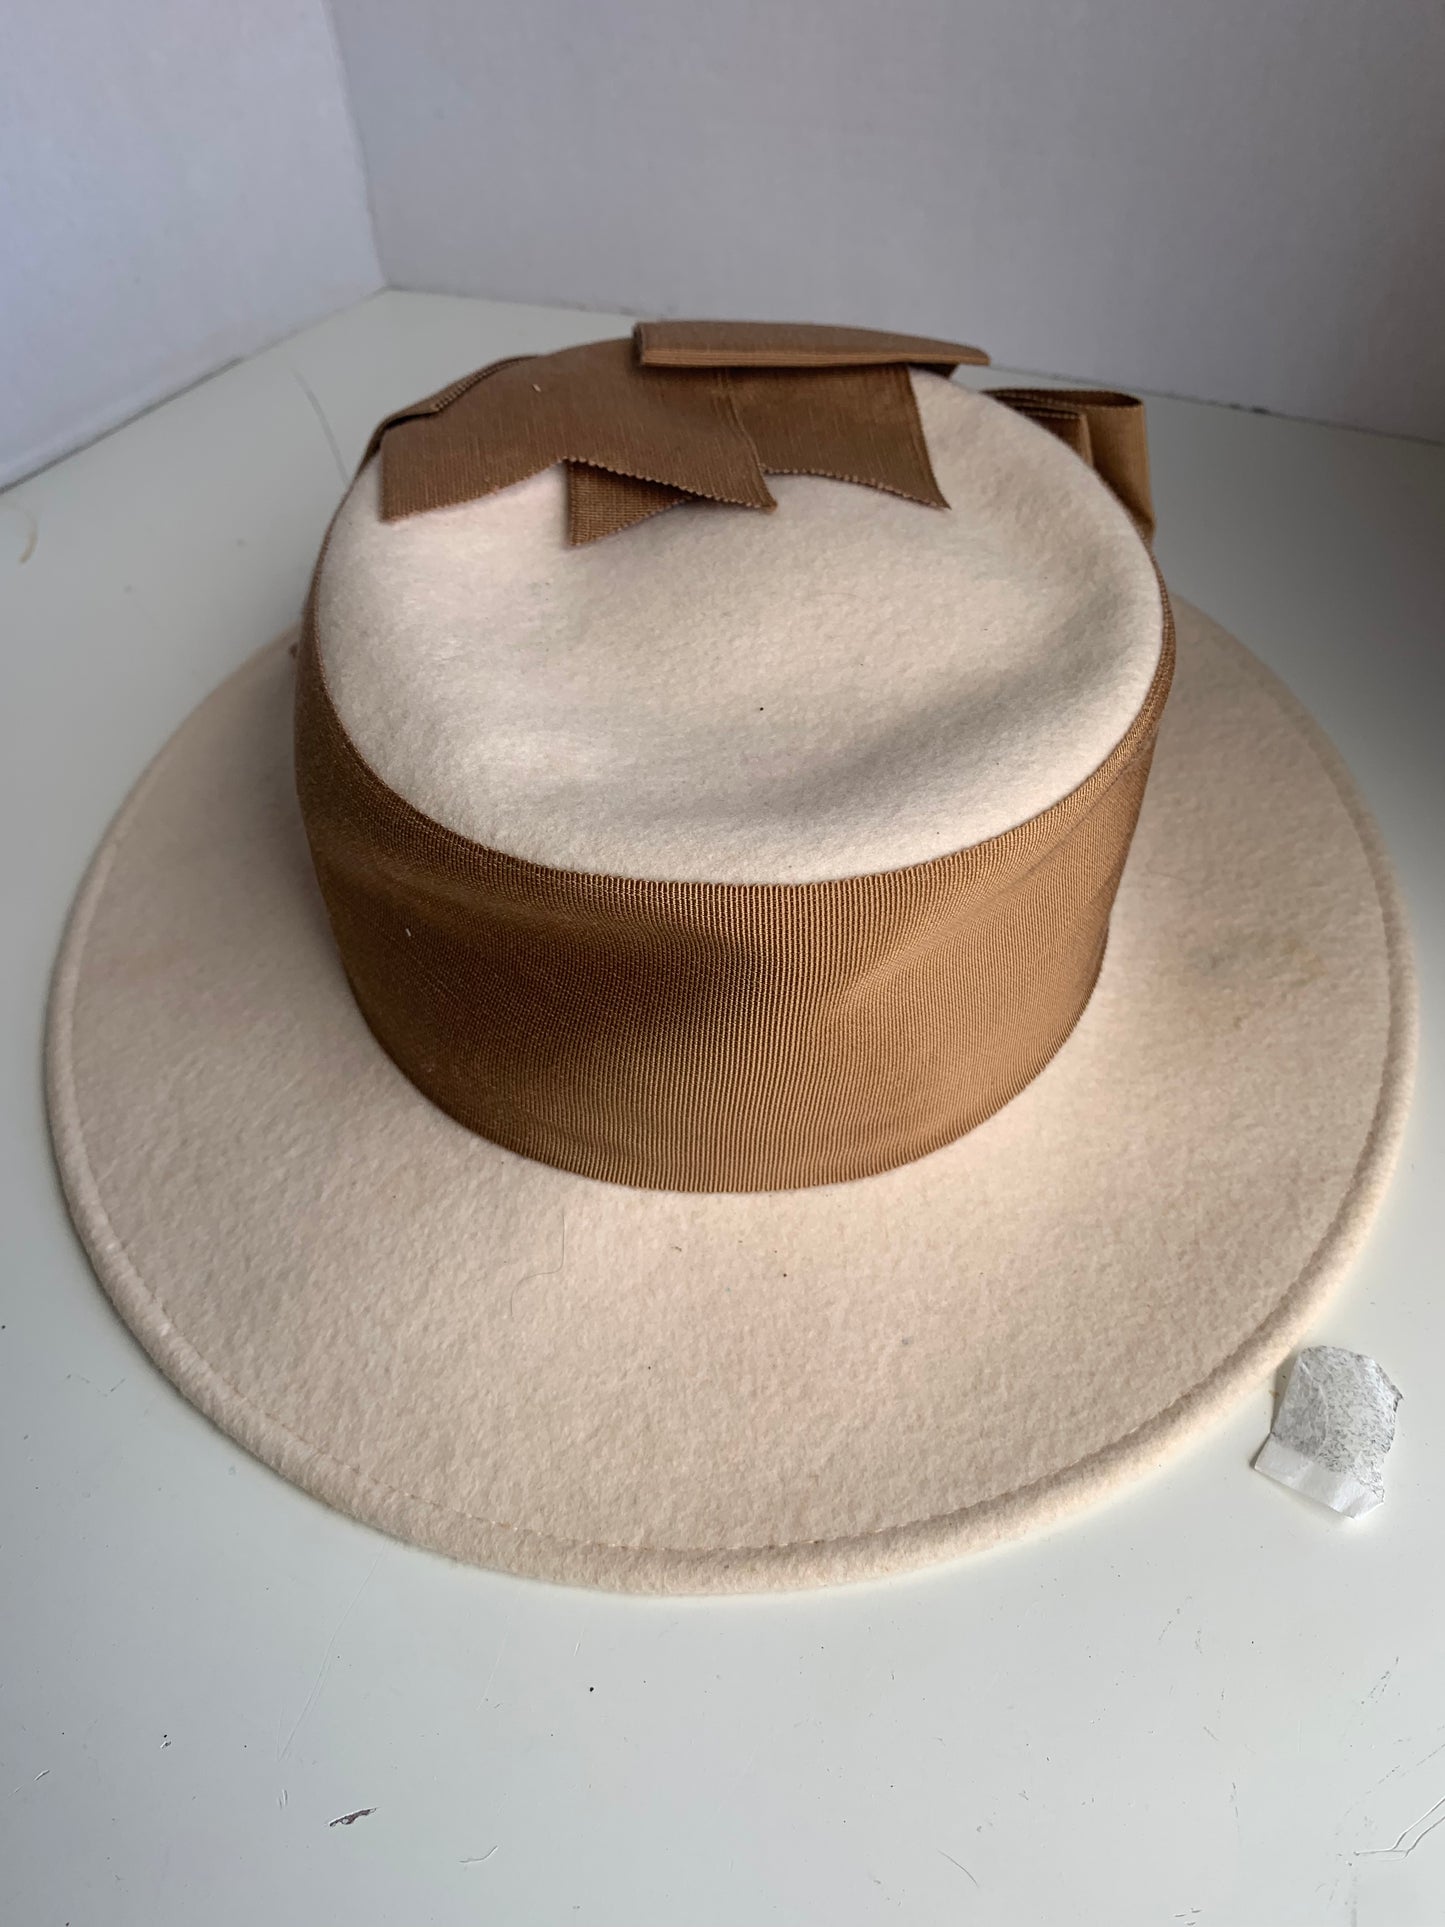 Paula’s Hatbox Michael Howard 100% Wool Hat